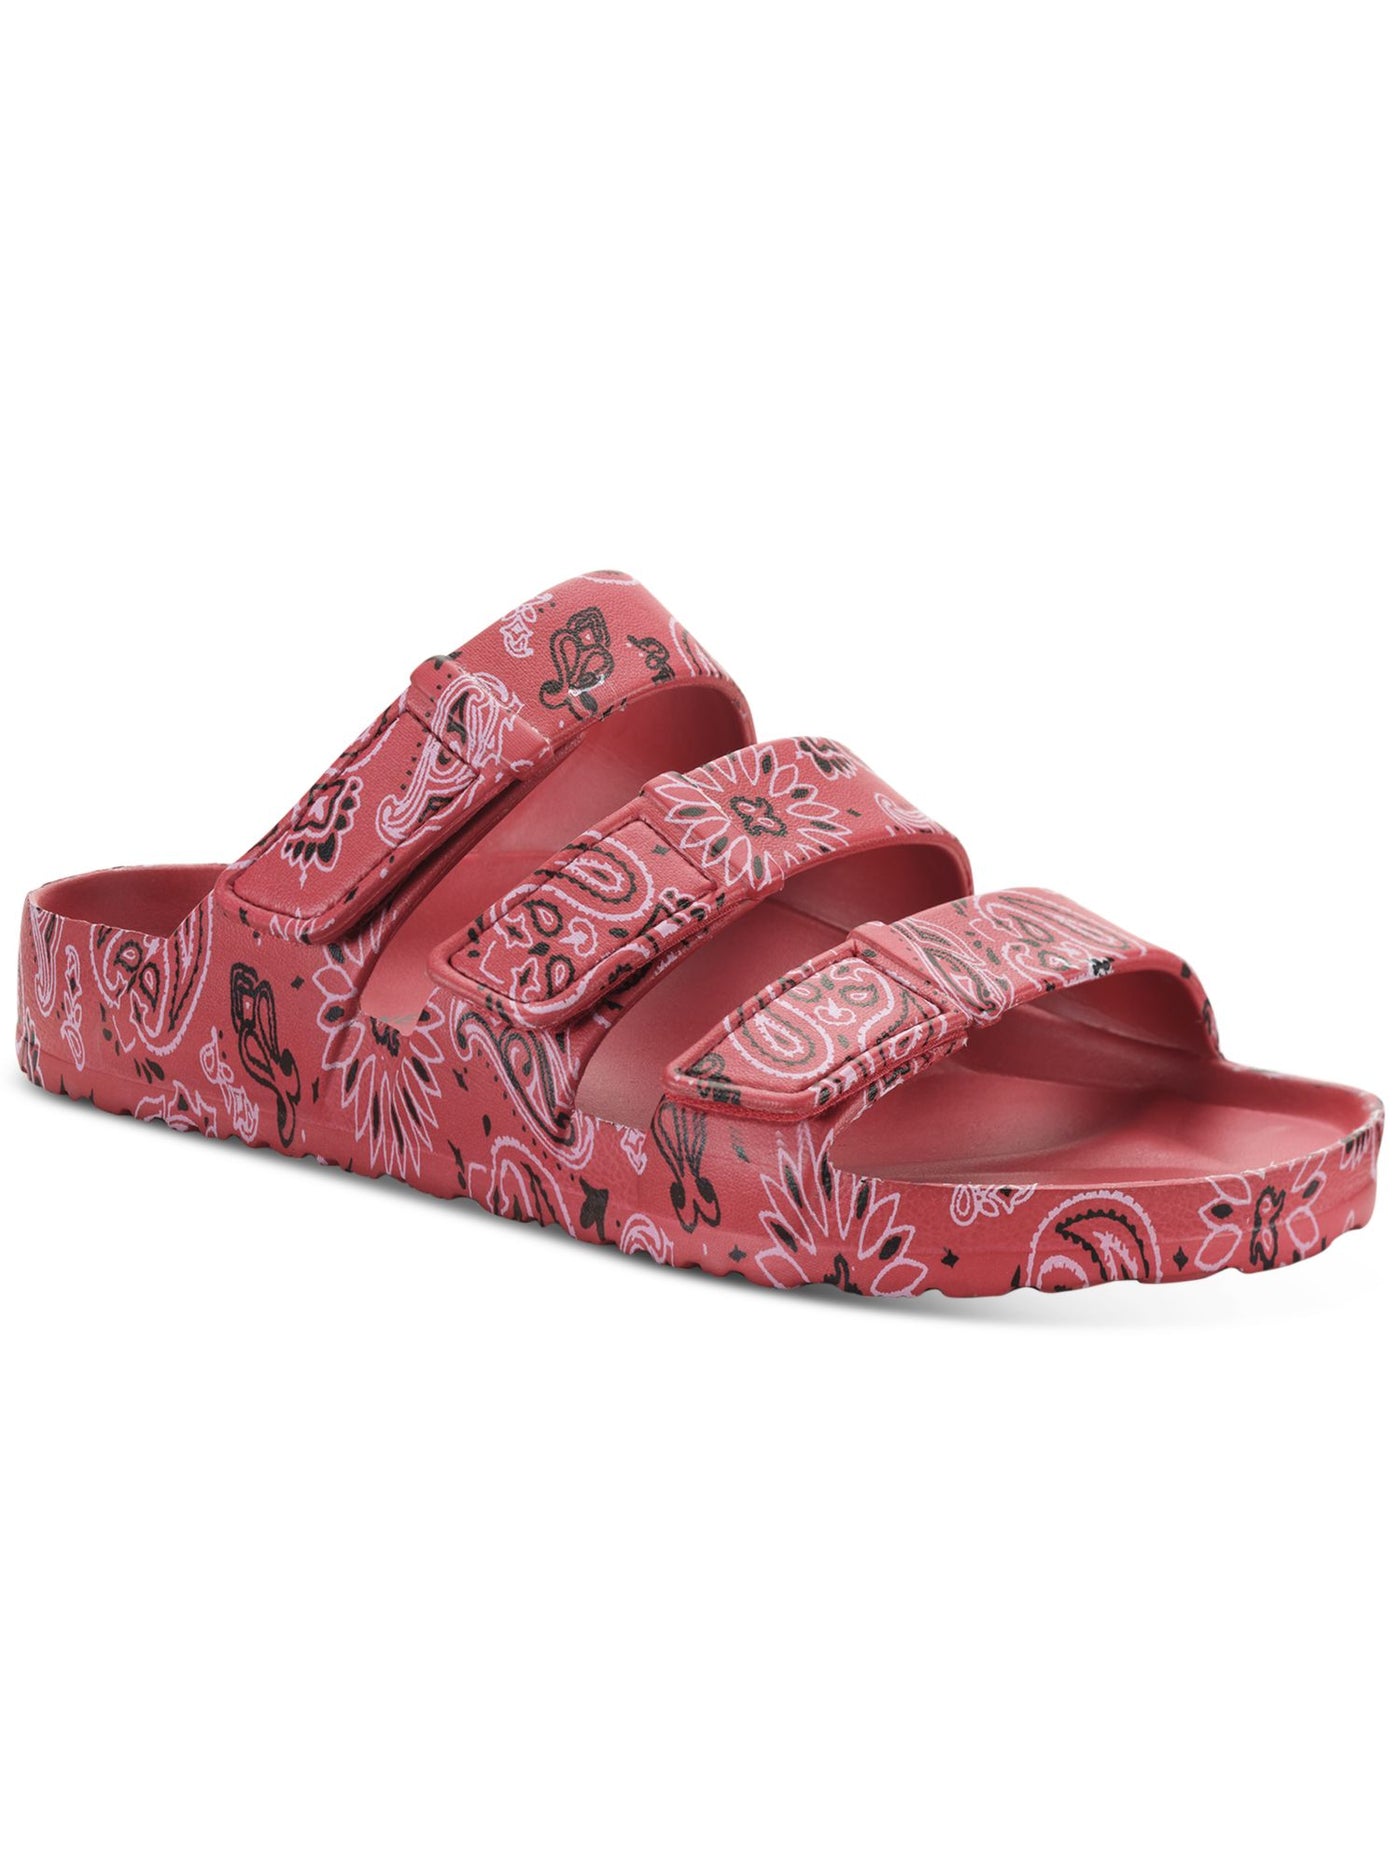 SUN STONE Mens Red Paisley Stay-Put Straps Flexible Sole Adjustable Bowie Open Toe Platform Slip On Slide Sandals Shoes 12 M